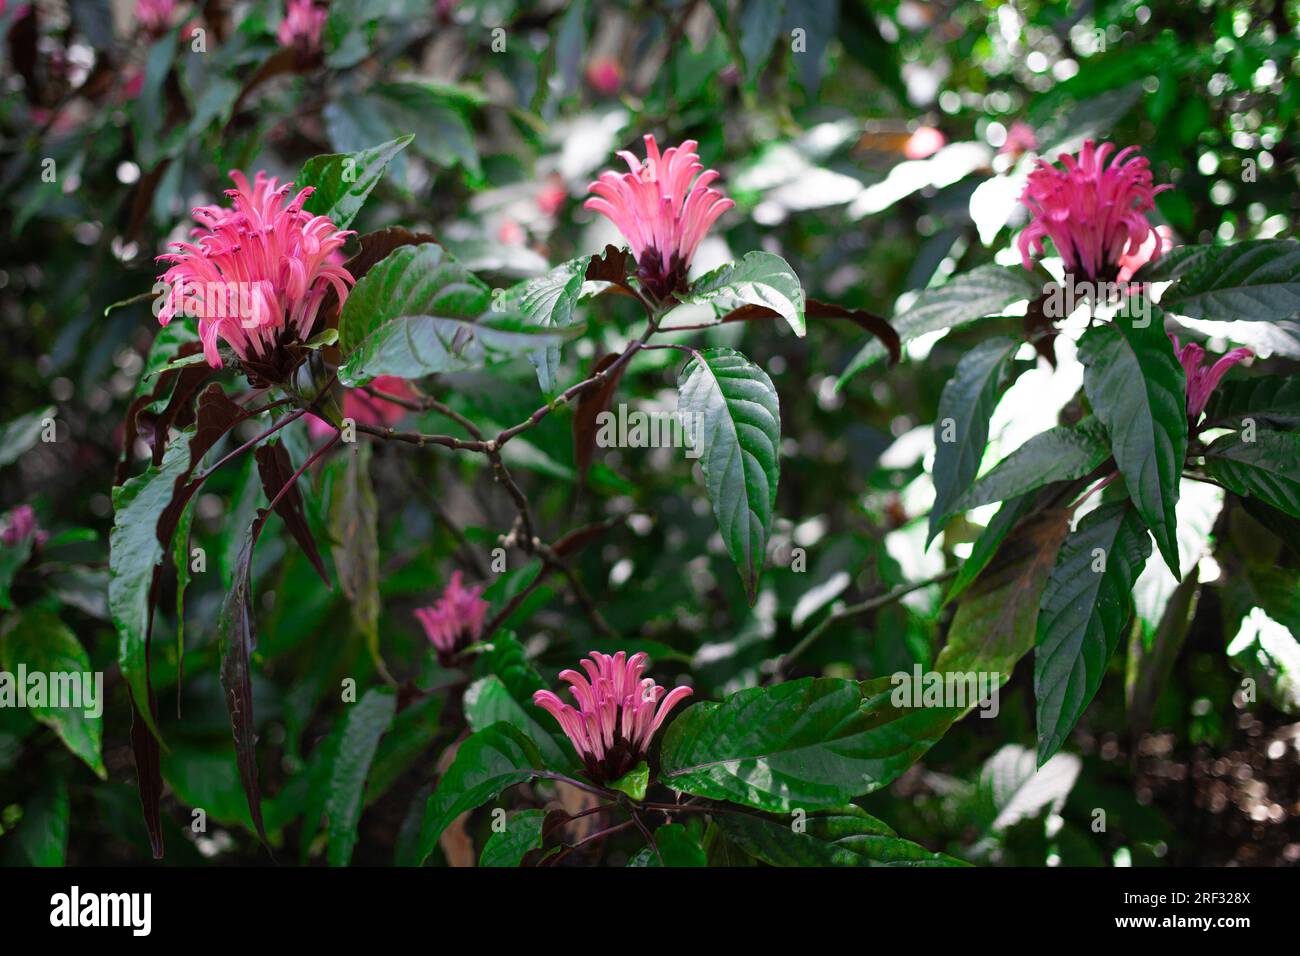 Justicia carnea, the Brazilian plume flower, Brazilian-plume, flamingo flower, jacobinia Stock Photo